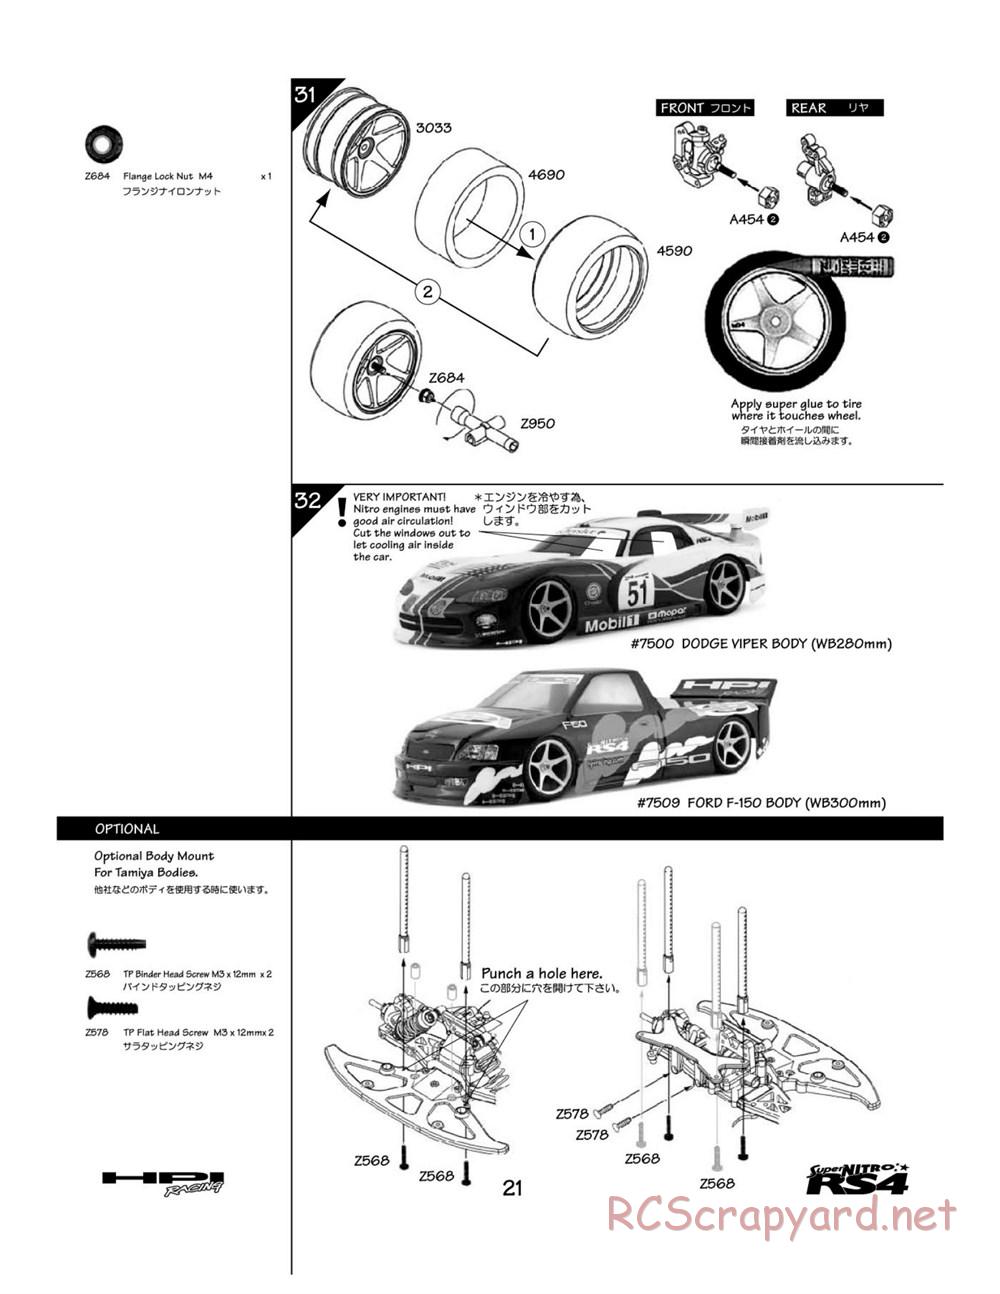 HPI - Super Nitro RS4 - Manual - Page 21